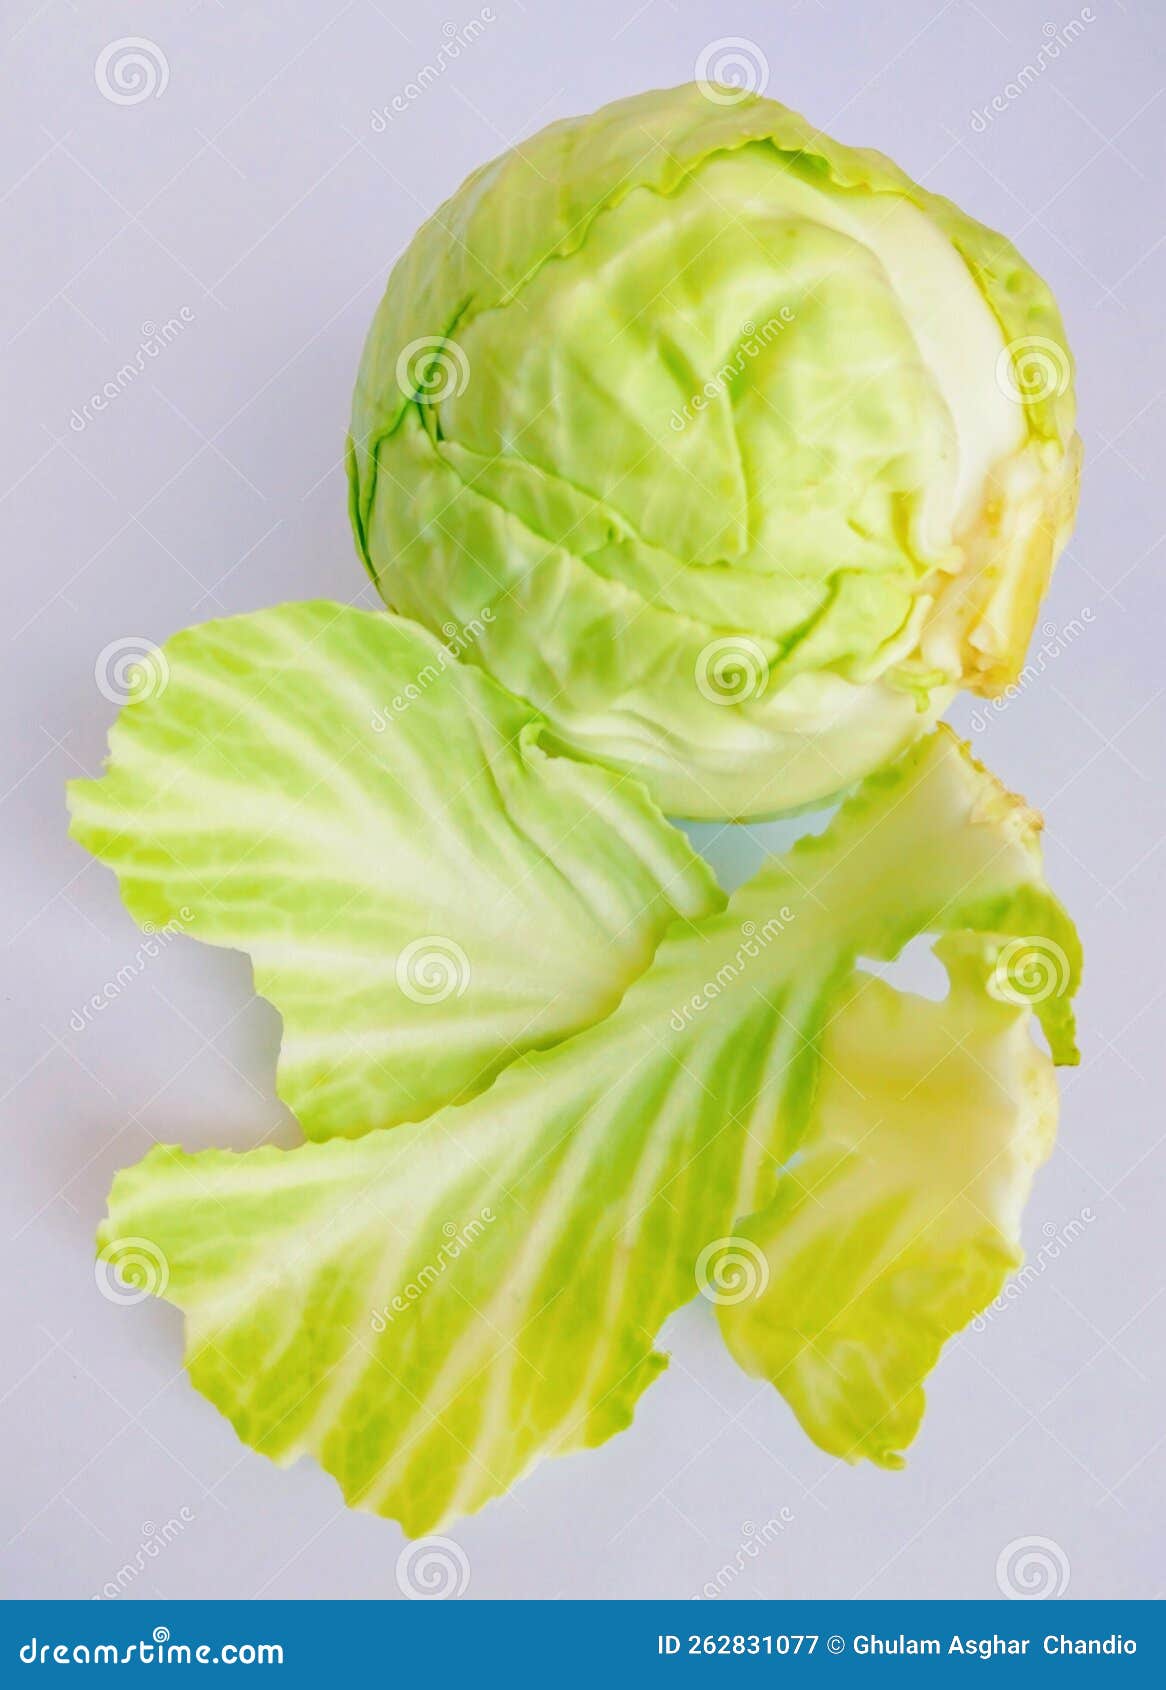 cabbage head wrapped green-cabbage leafy greens vegetable food band gobi pata gobi brassica oleracea var. capitata stock photo